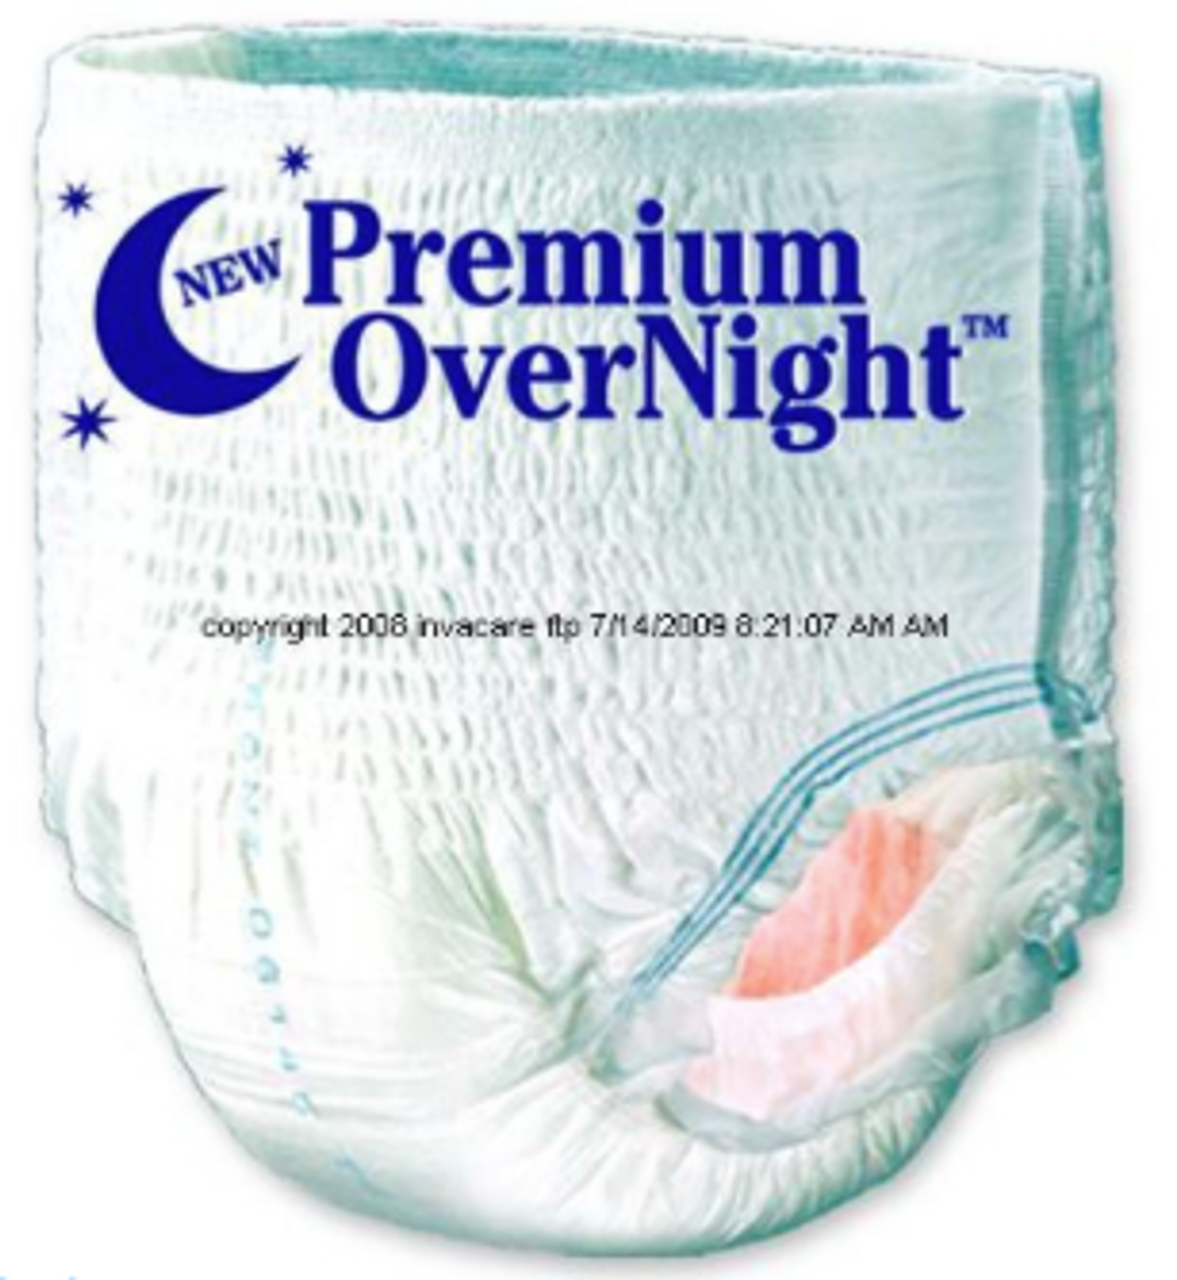 Tranquility Premium OverNight Protective Underwear (unisex